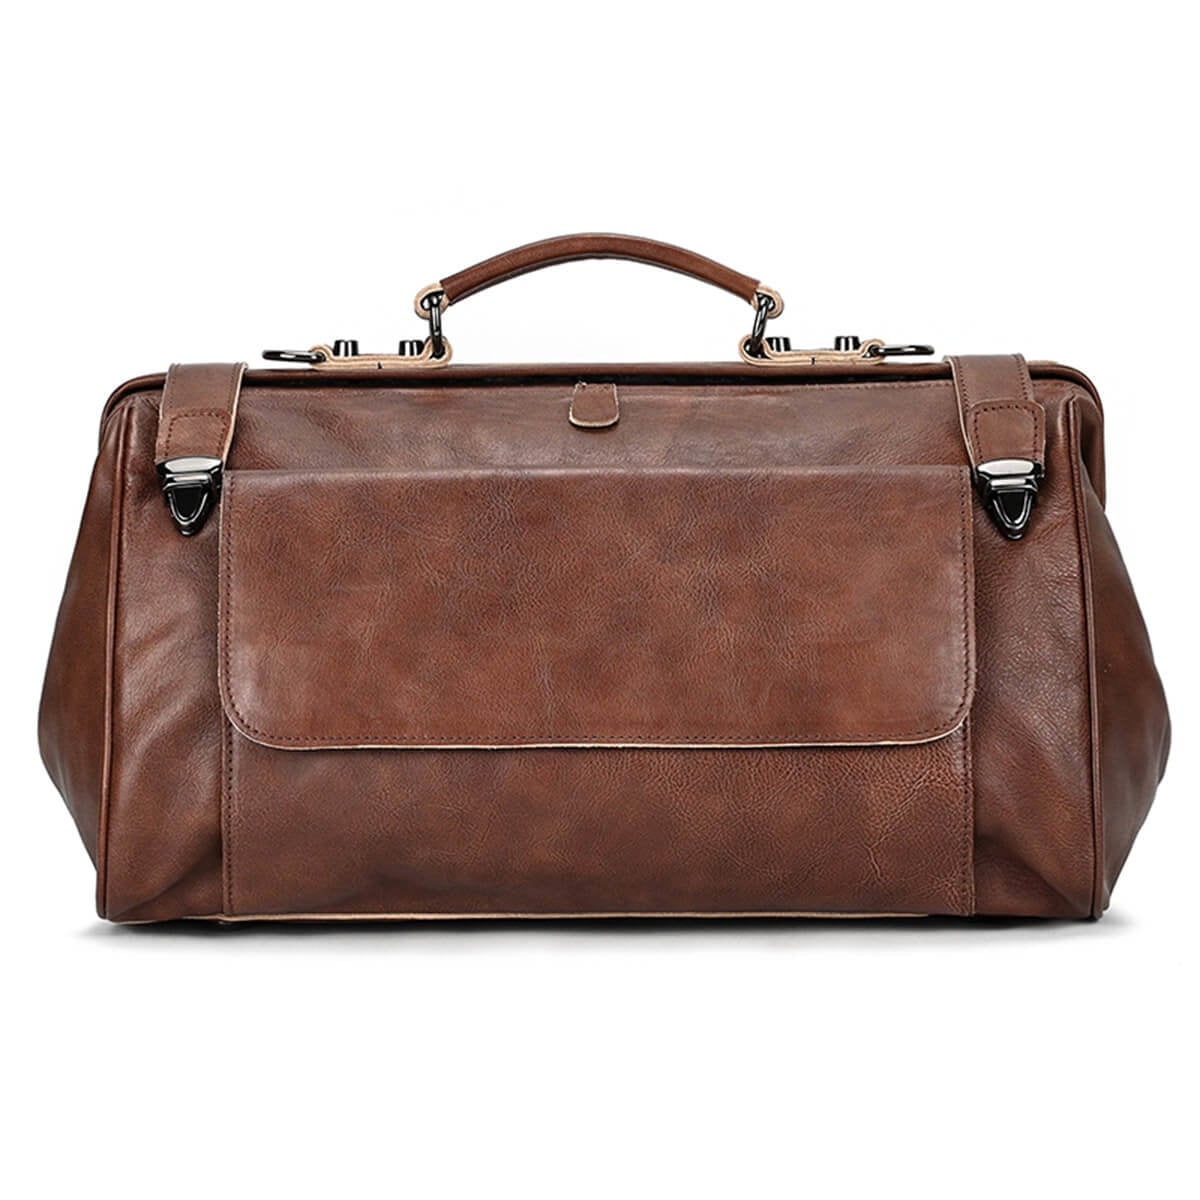 Premium Leather Travel Duffle Bag